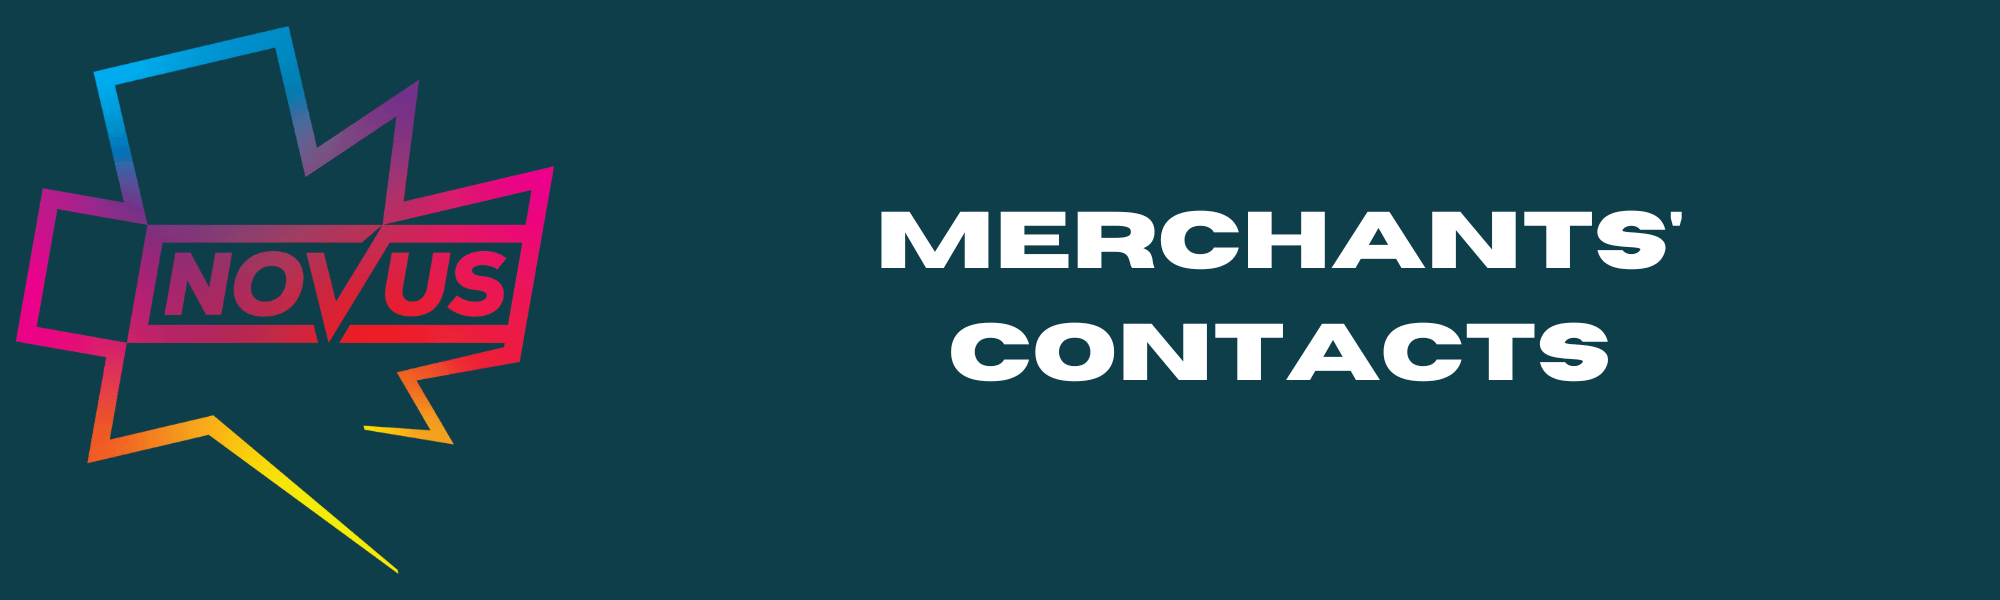 Merchant's Contacts